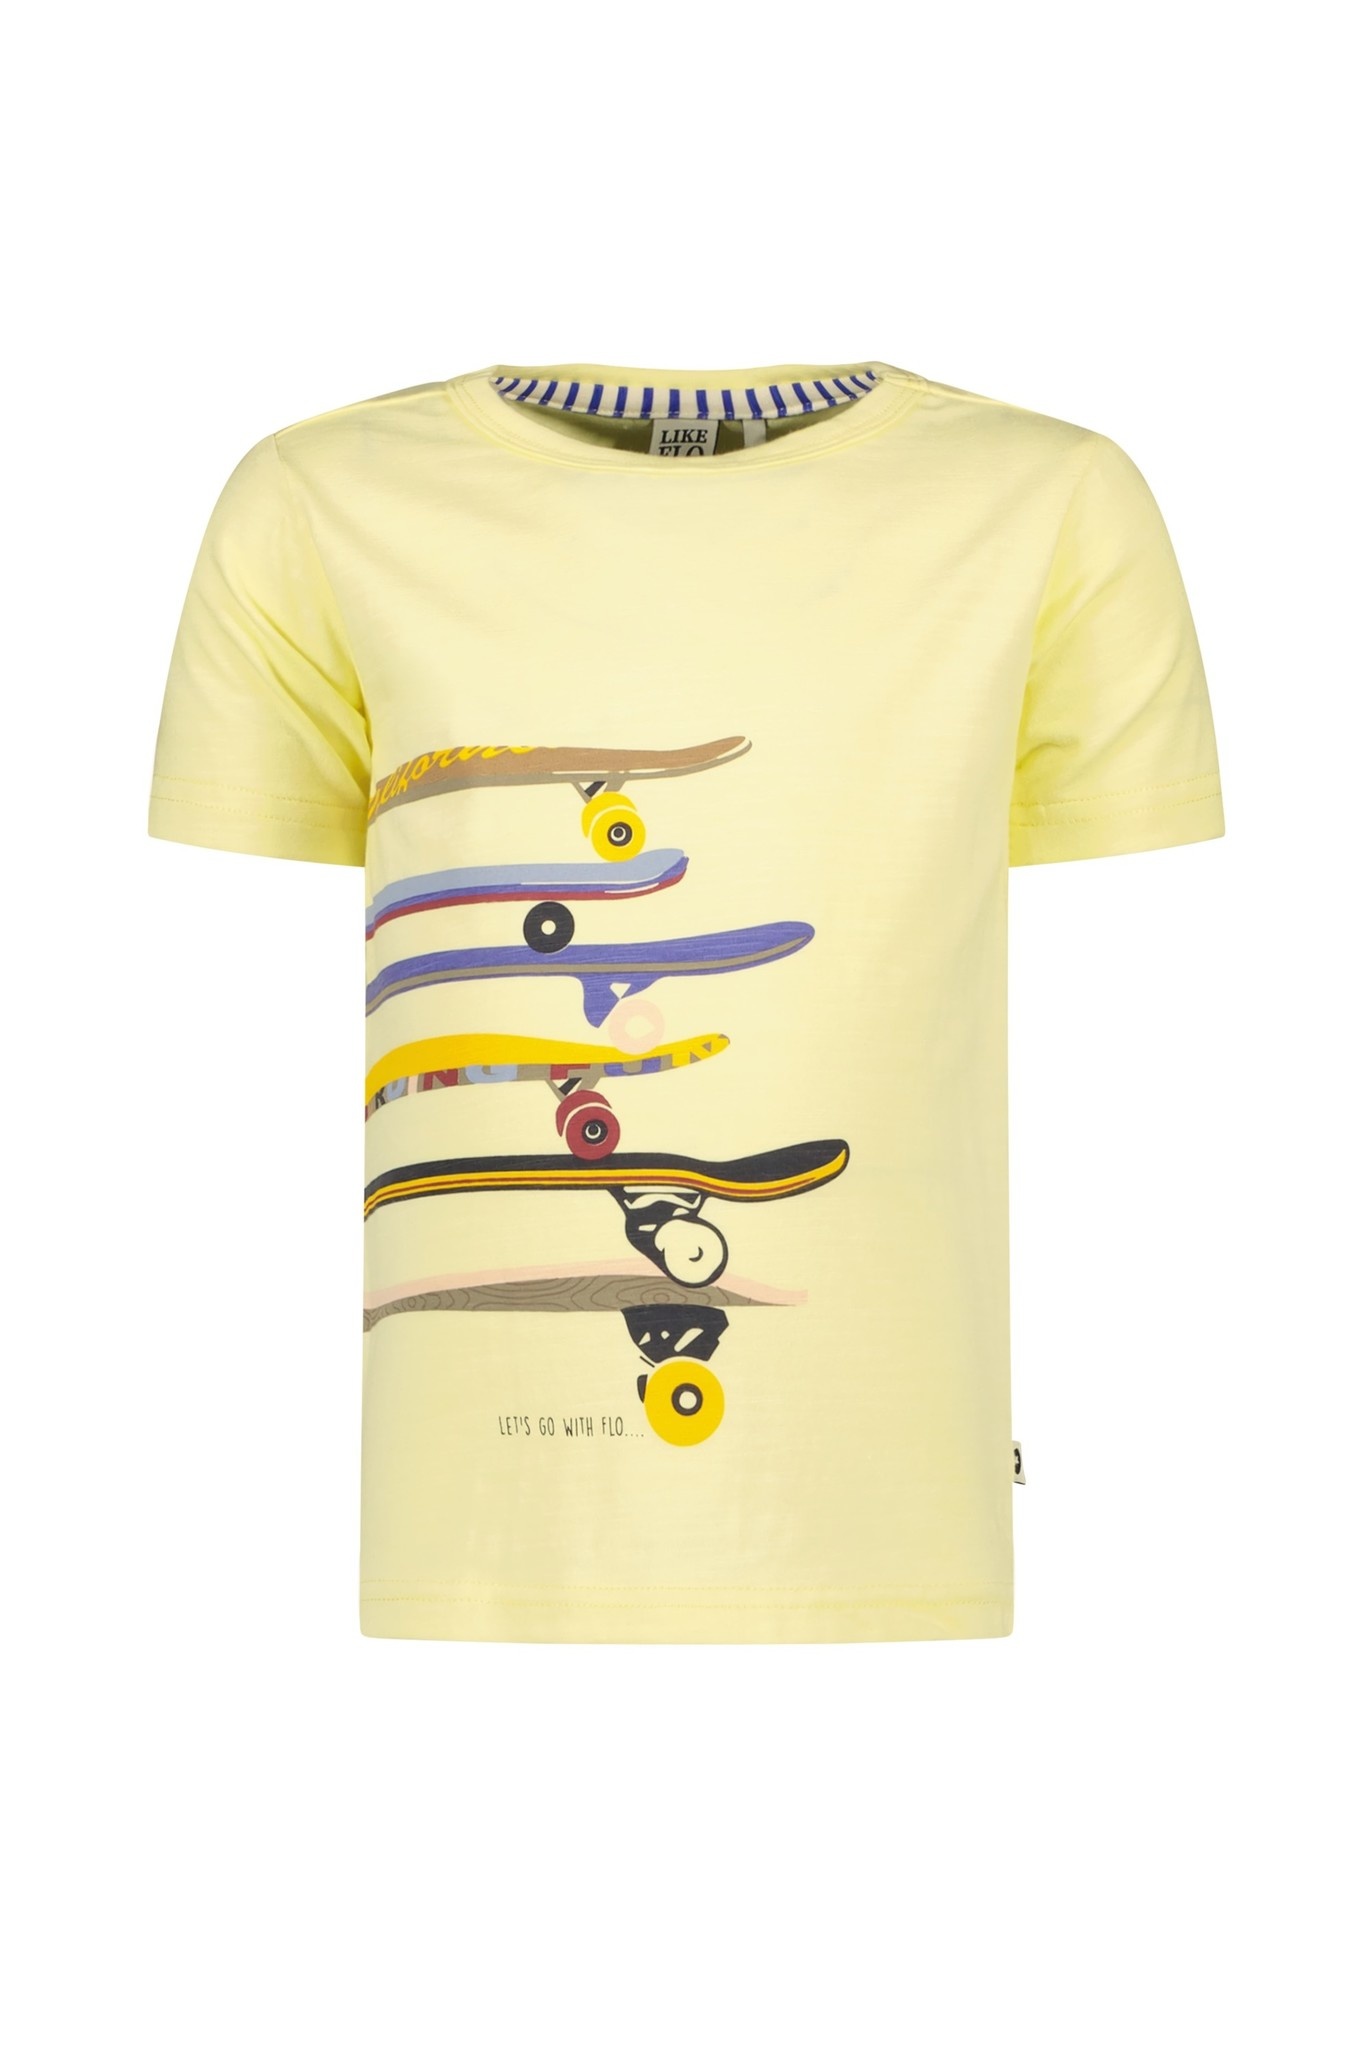 Like Flo - T-Shirt - Soft yellow - Maat 128